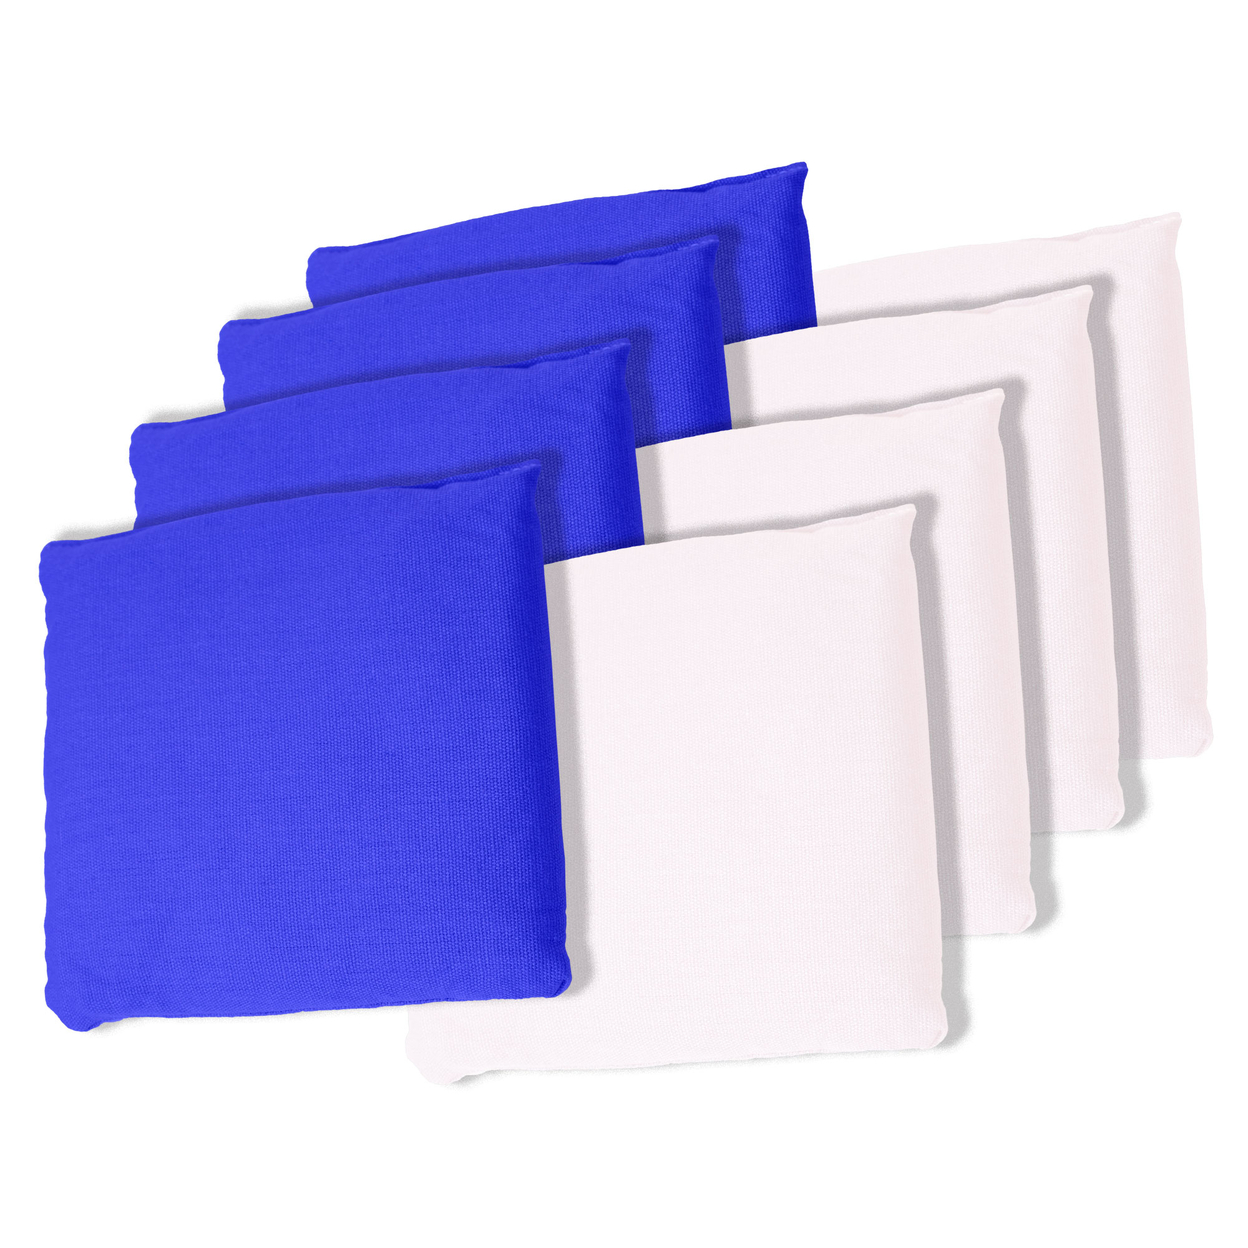 Regulation Sized Cornhole Bag Set- Durable Canvas Bags 8 Pack Blue White